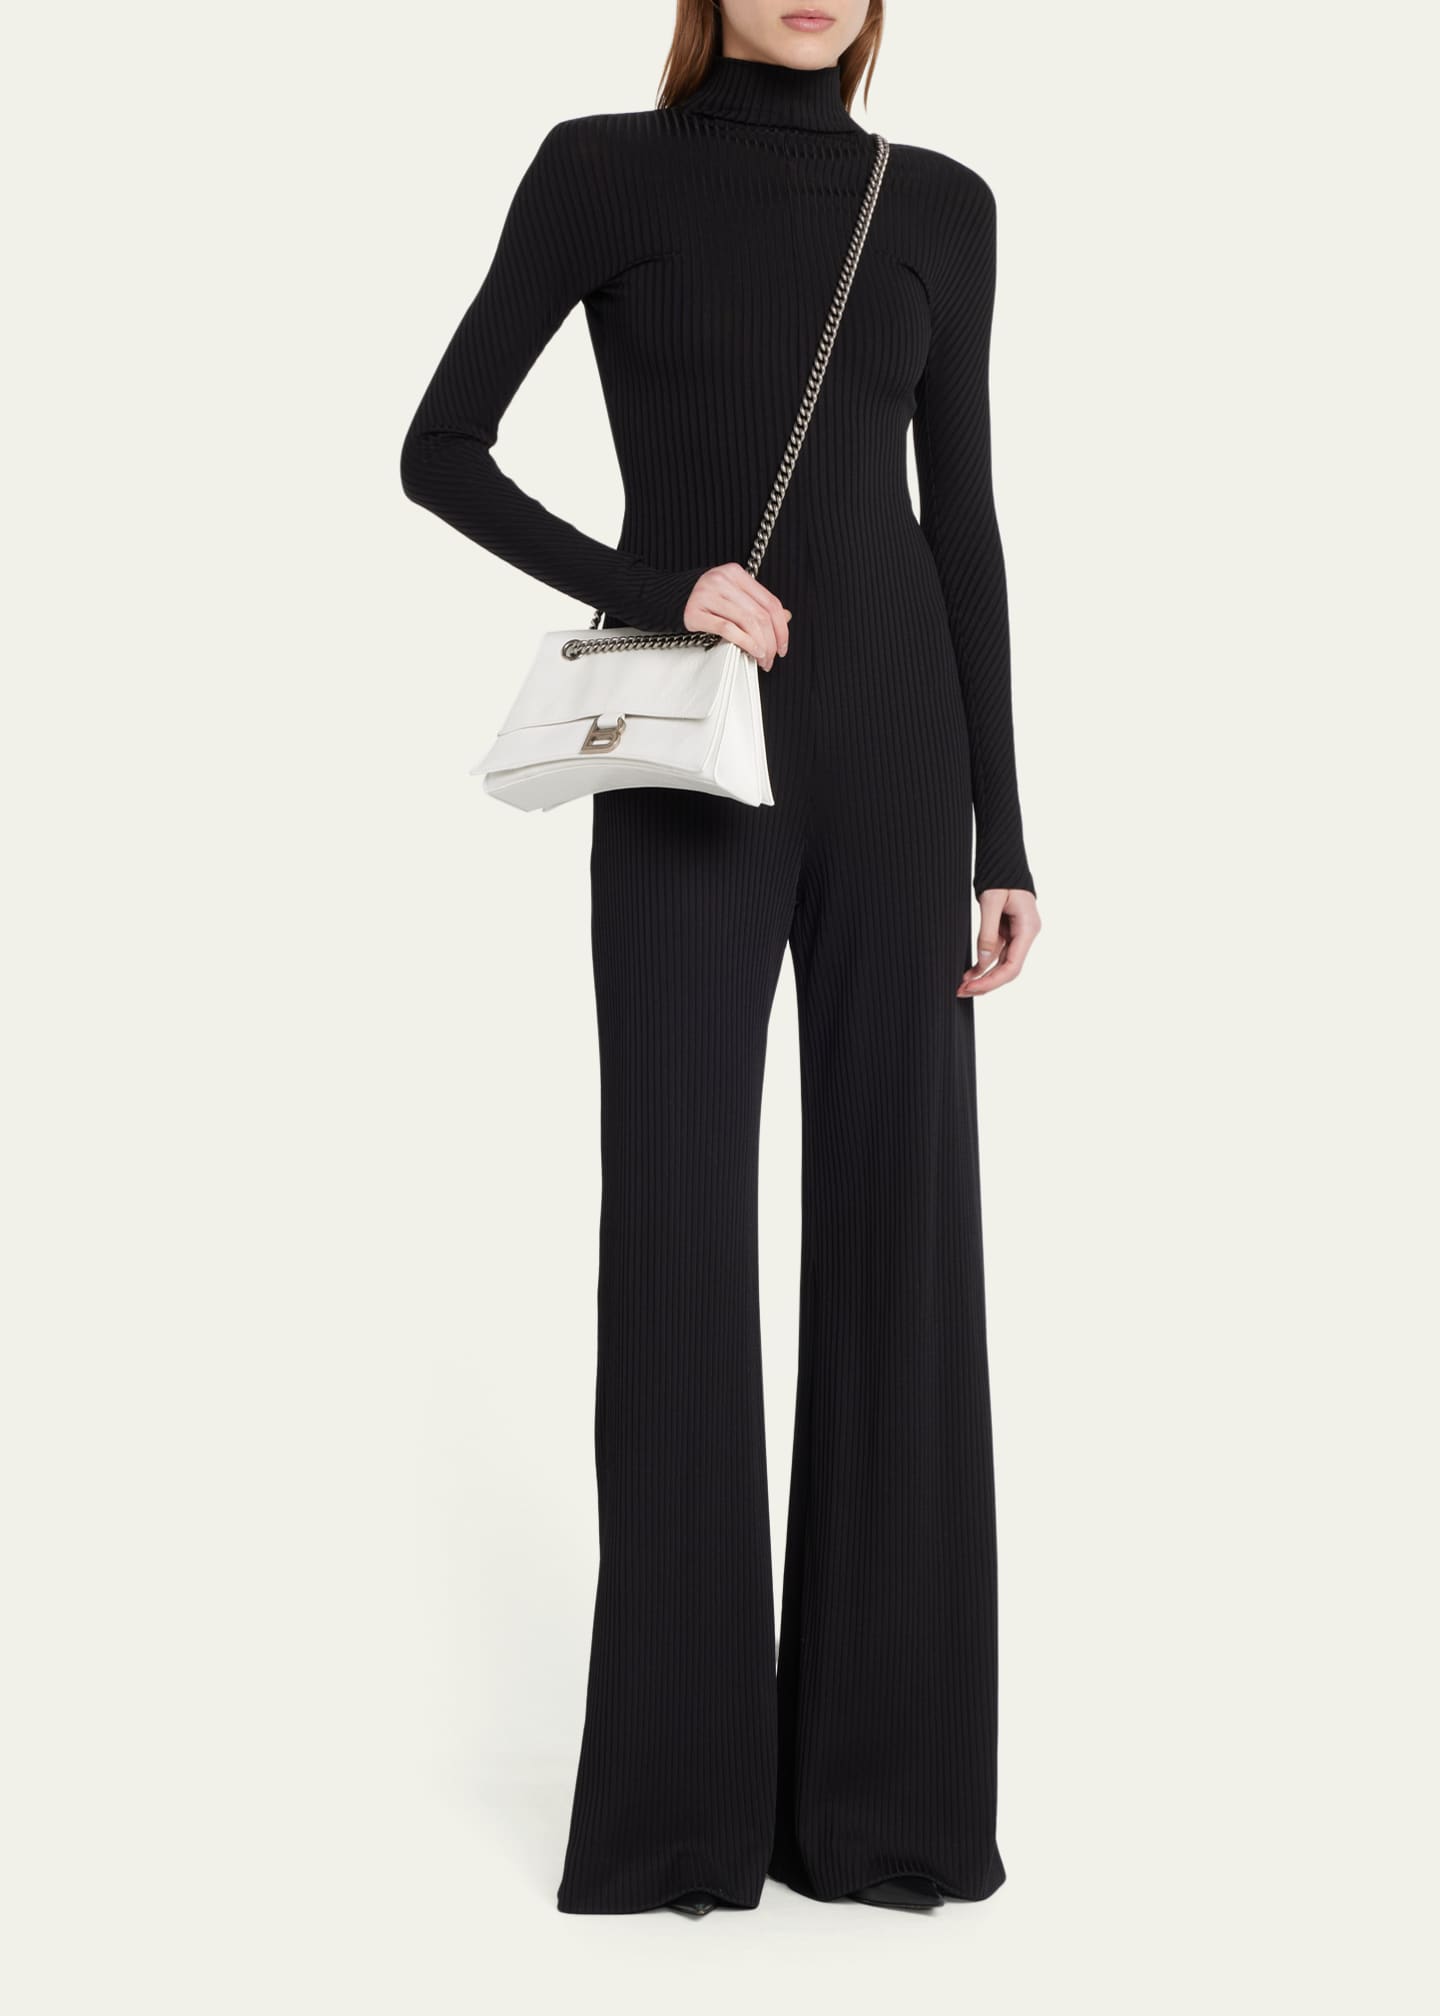 Balenciaga Bazar Leather Chain Shoulder Bag - Bergdorf Goodman